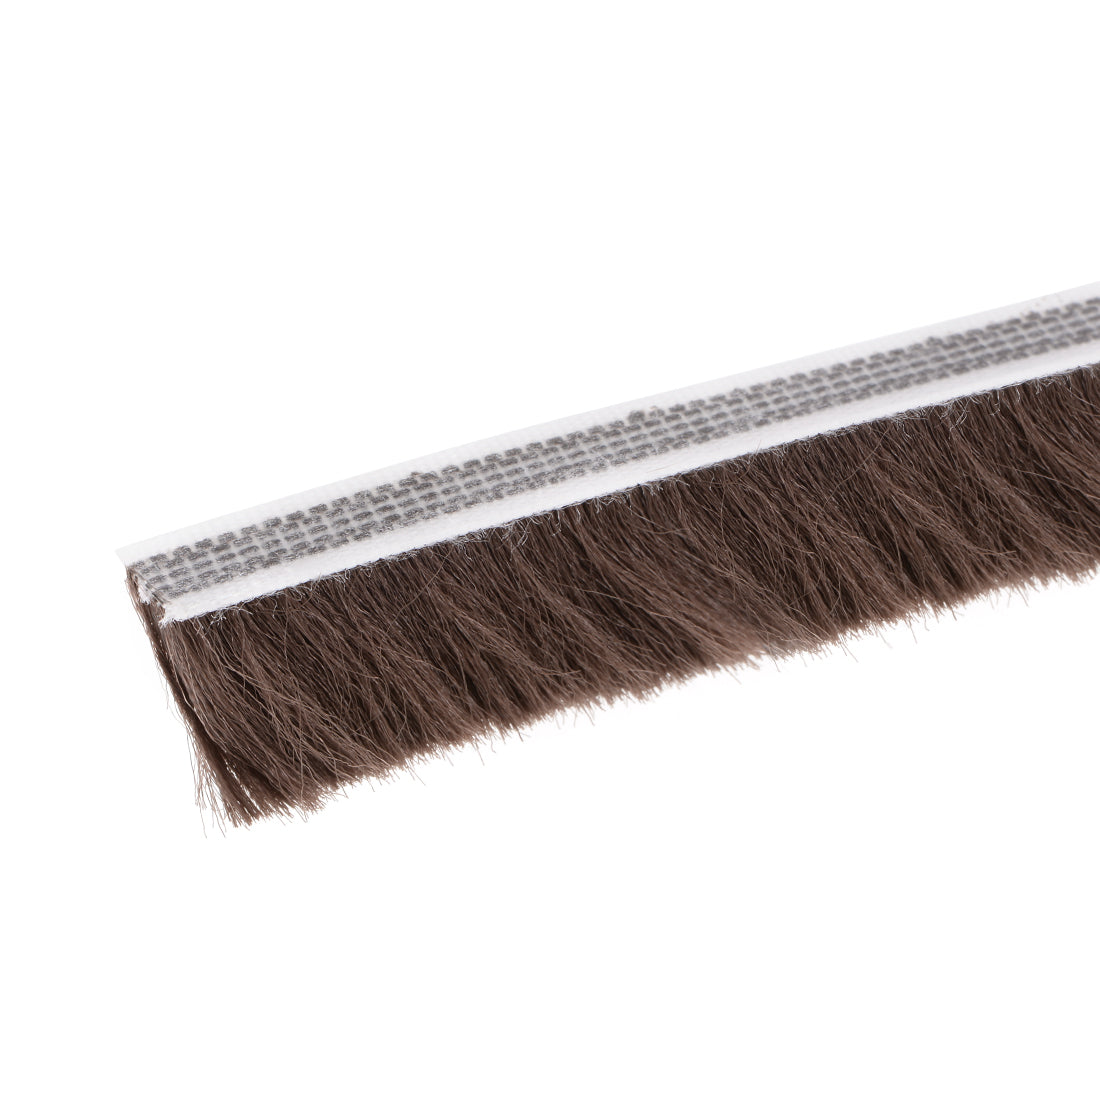 uxcell Uxcell Brush Weather Stripping, Adhesive Felt Door Seal Strip Pile Weatherstrip Door Sweep Brush for Door Window  197Inch L X 0.9 Inch W (5000mm X 23mm)Brown